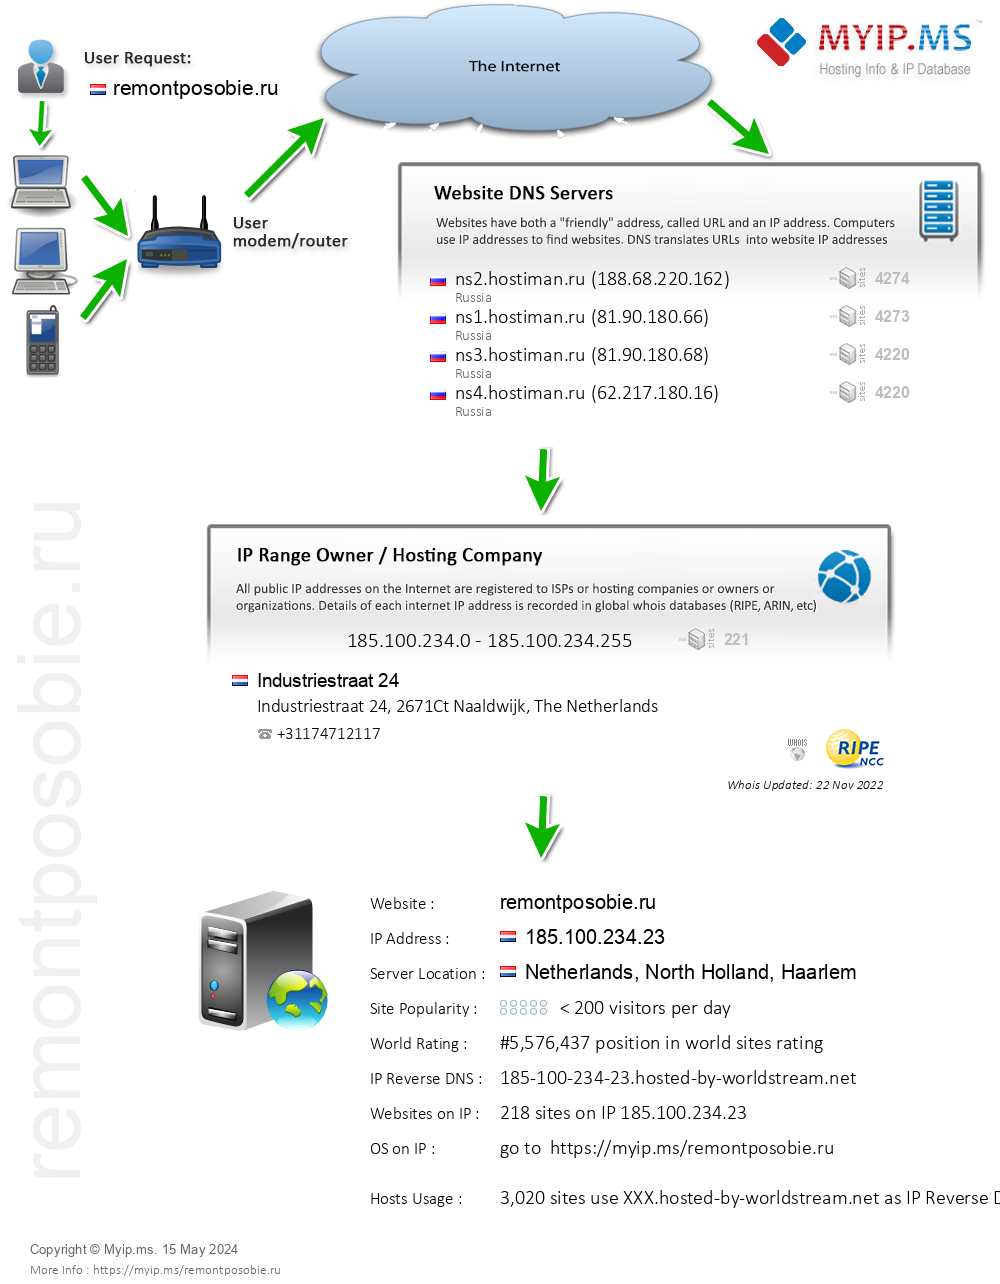 Remontposobie.ru - Website Hosting Visual IP Diagram